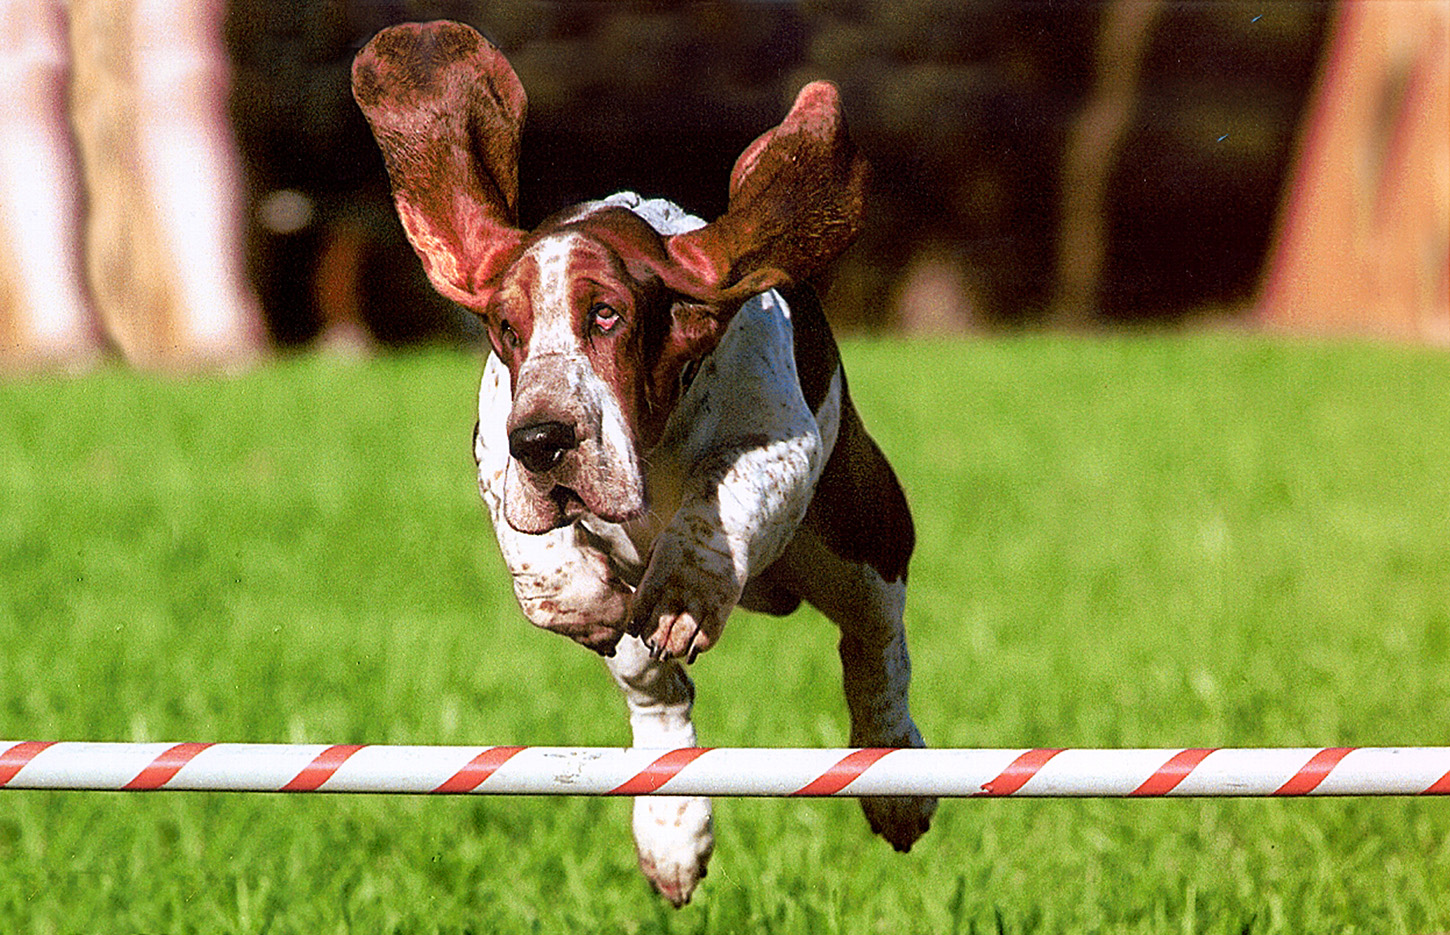 basset hound jumping